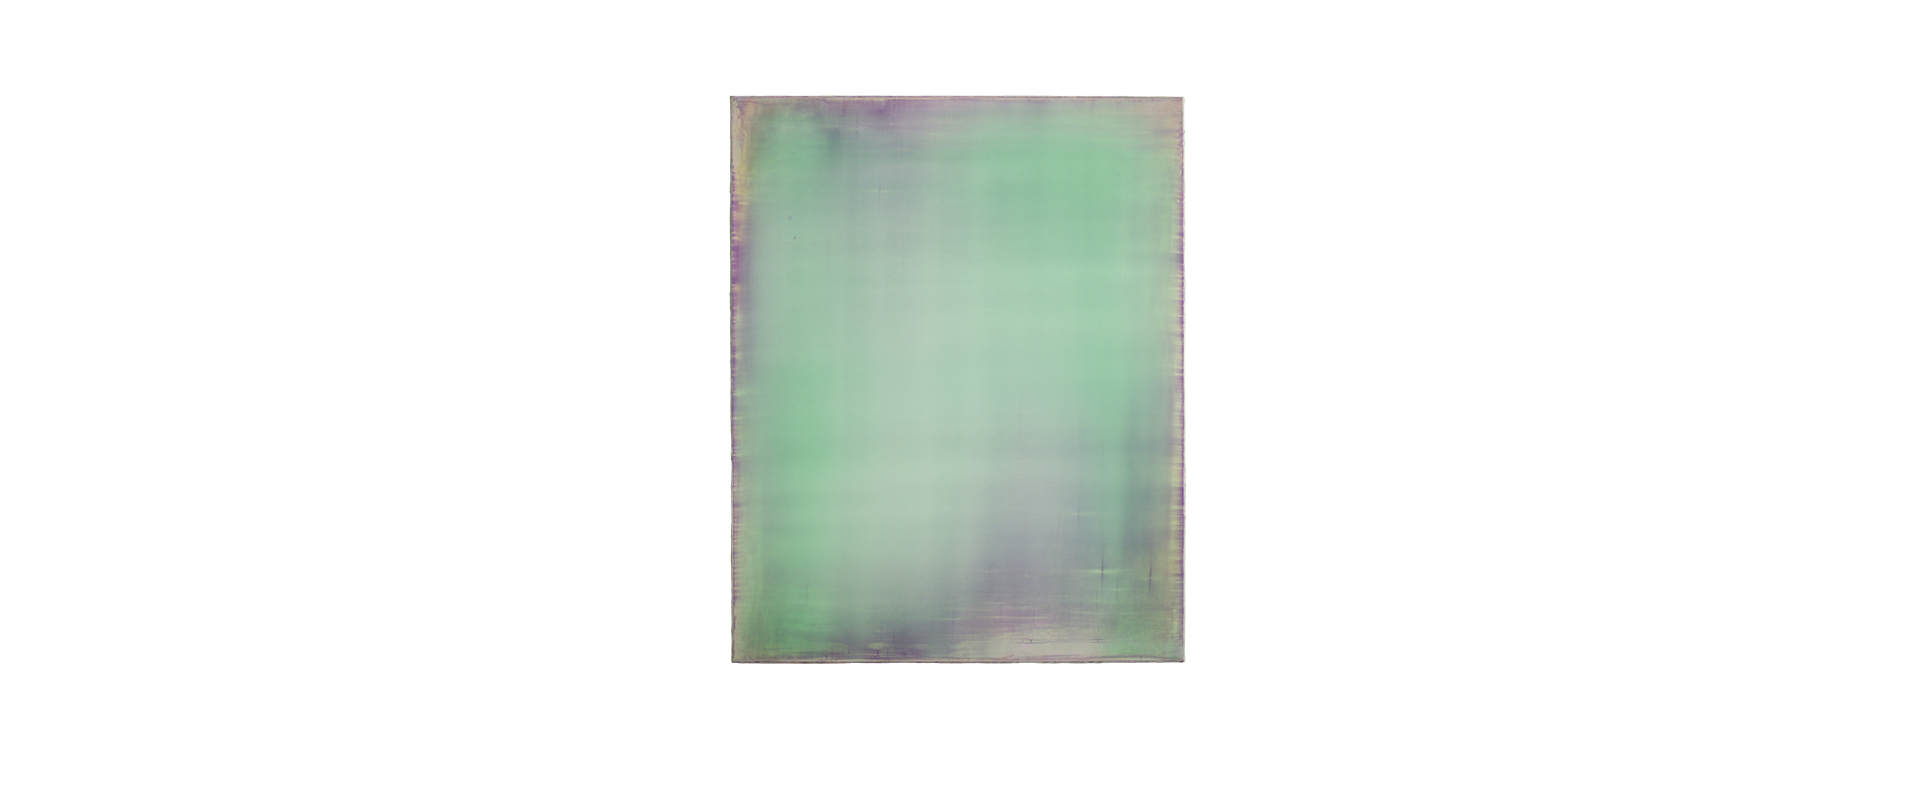 Jus Juchtmans, 20211121 – 2021, Acryl auf Leinwand, 100 x 80 cm